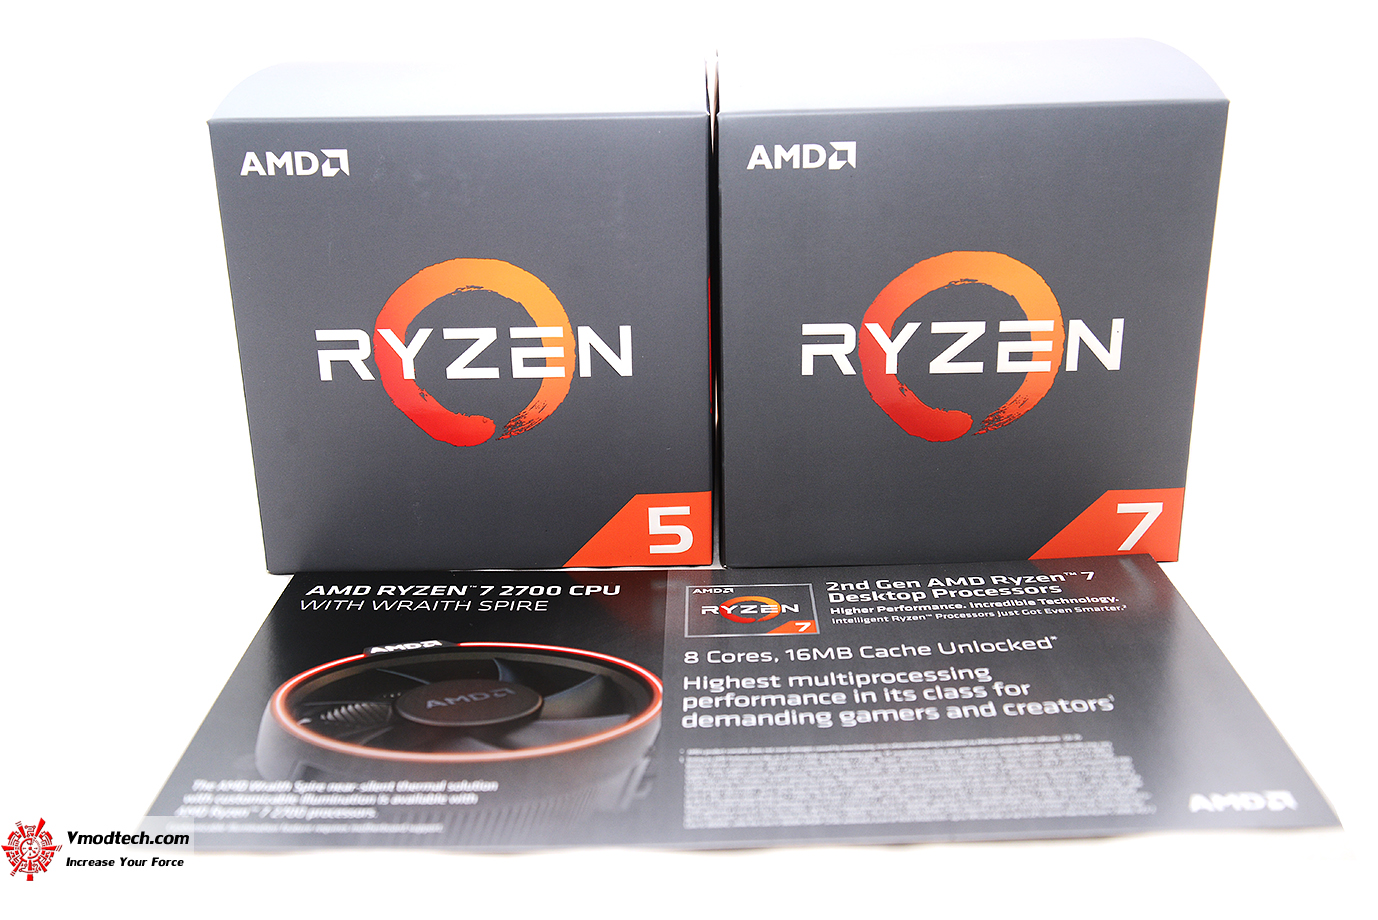 dsc 2287 AMD RYZEN 7 2700 and StoreMI Technology Review